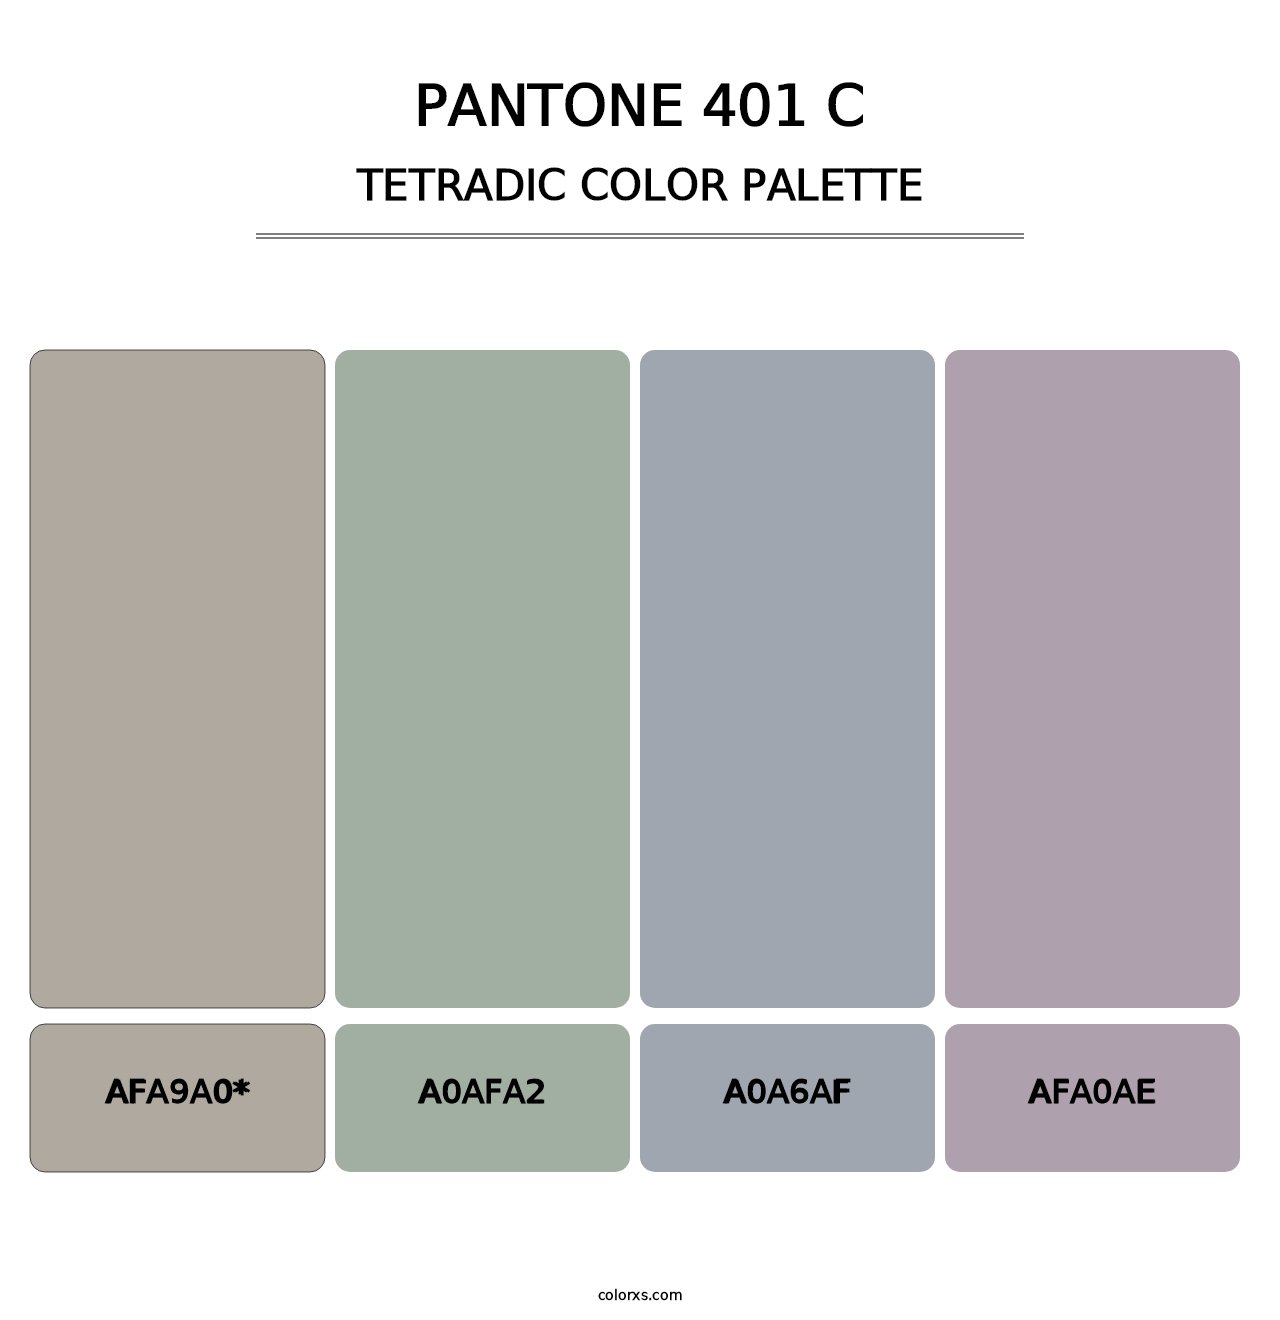 PANTONE 401 C - Tetradic Color Palette